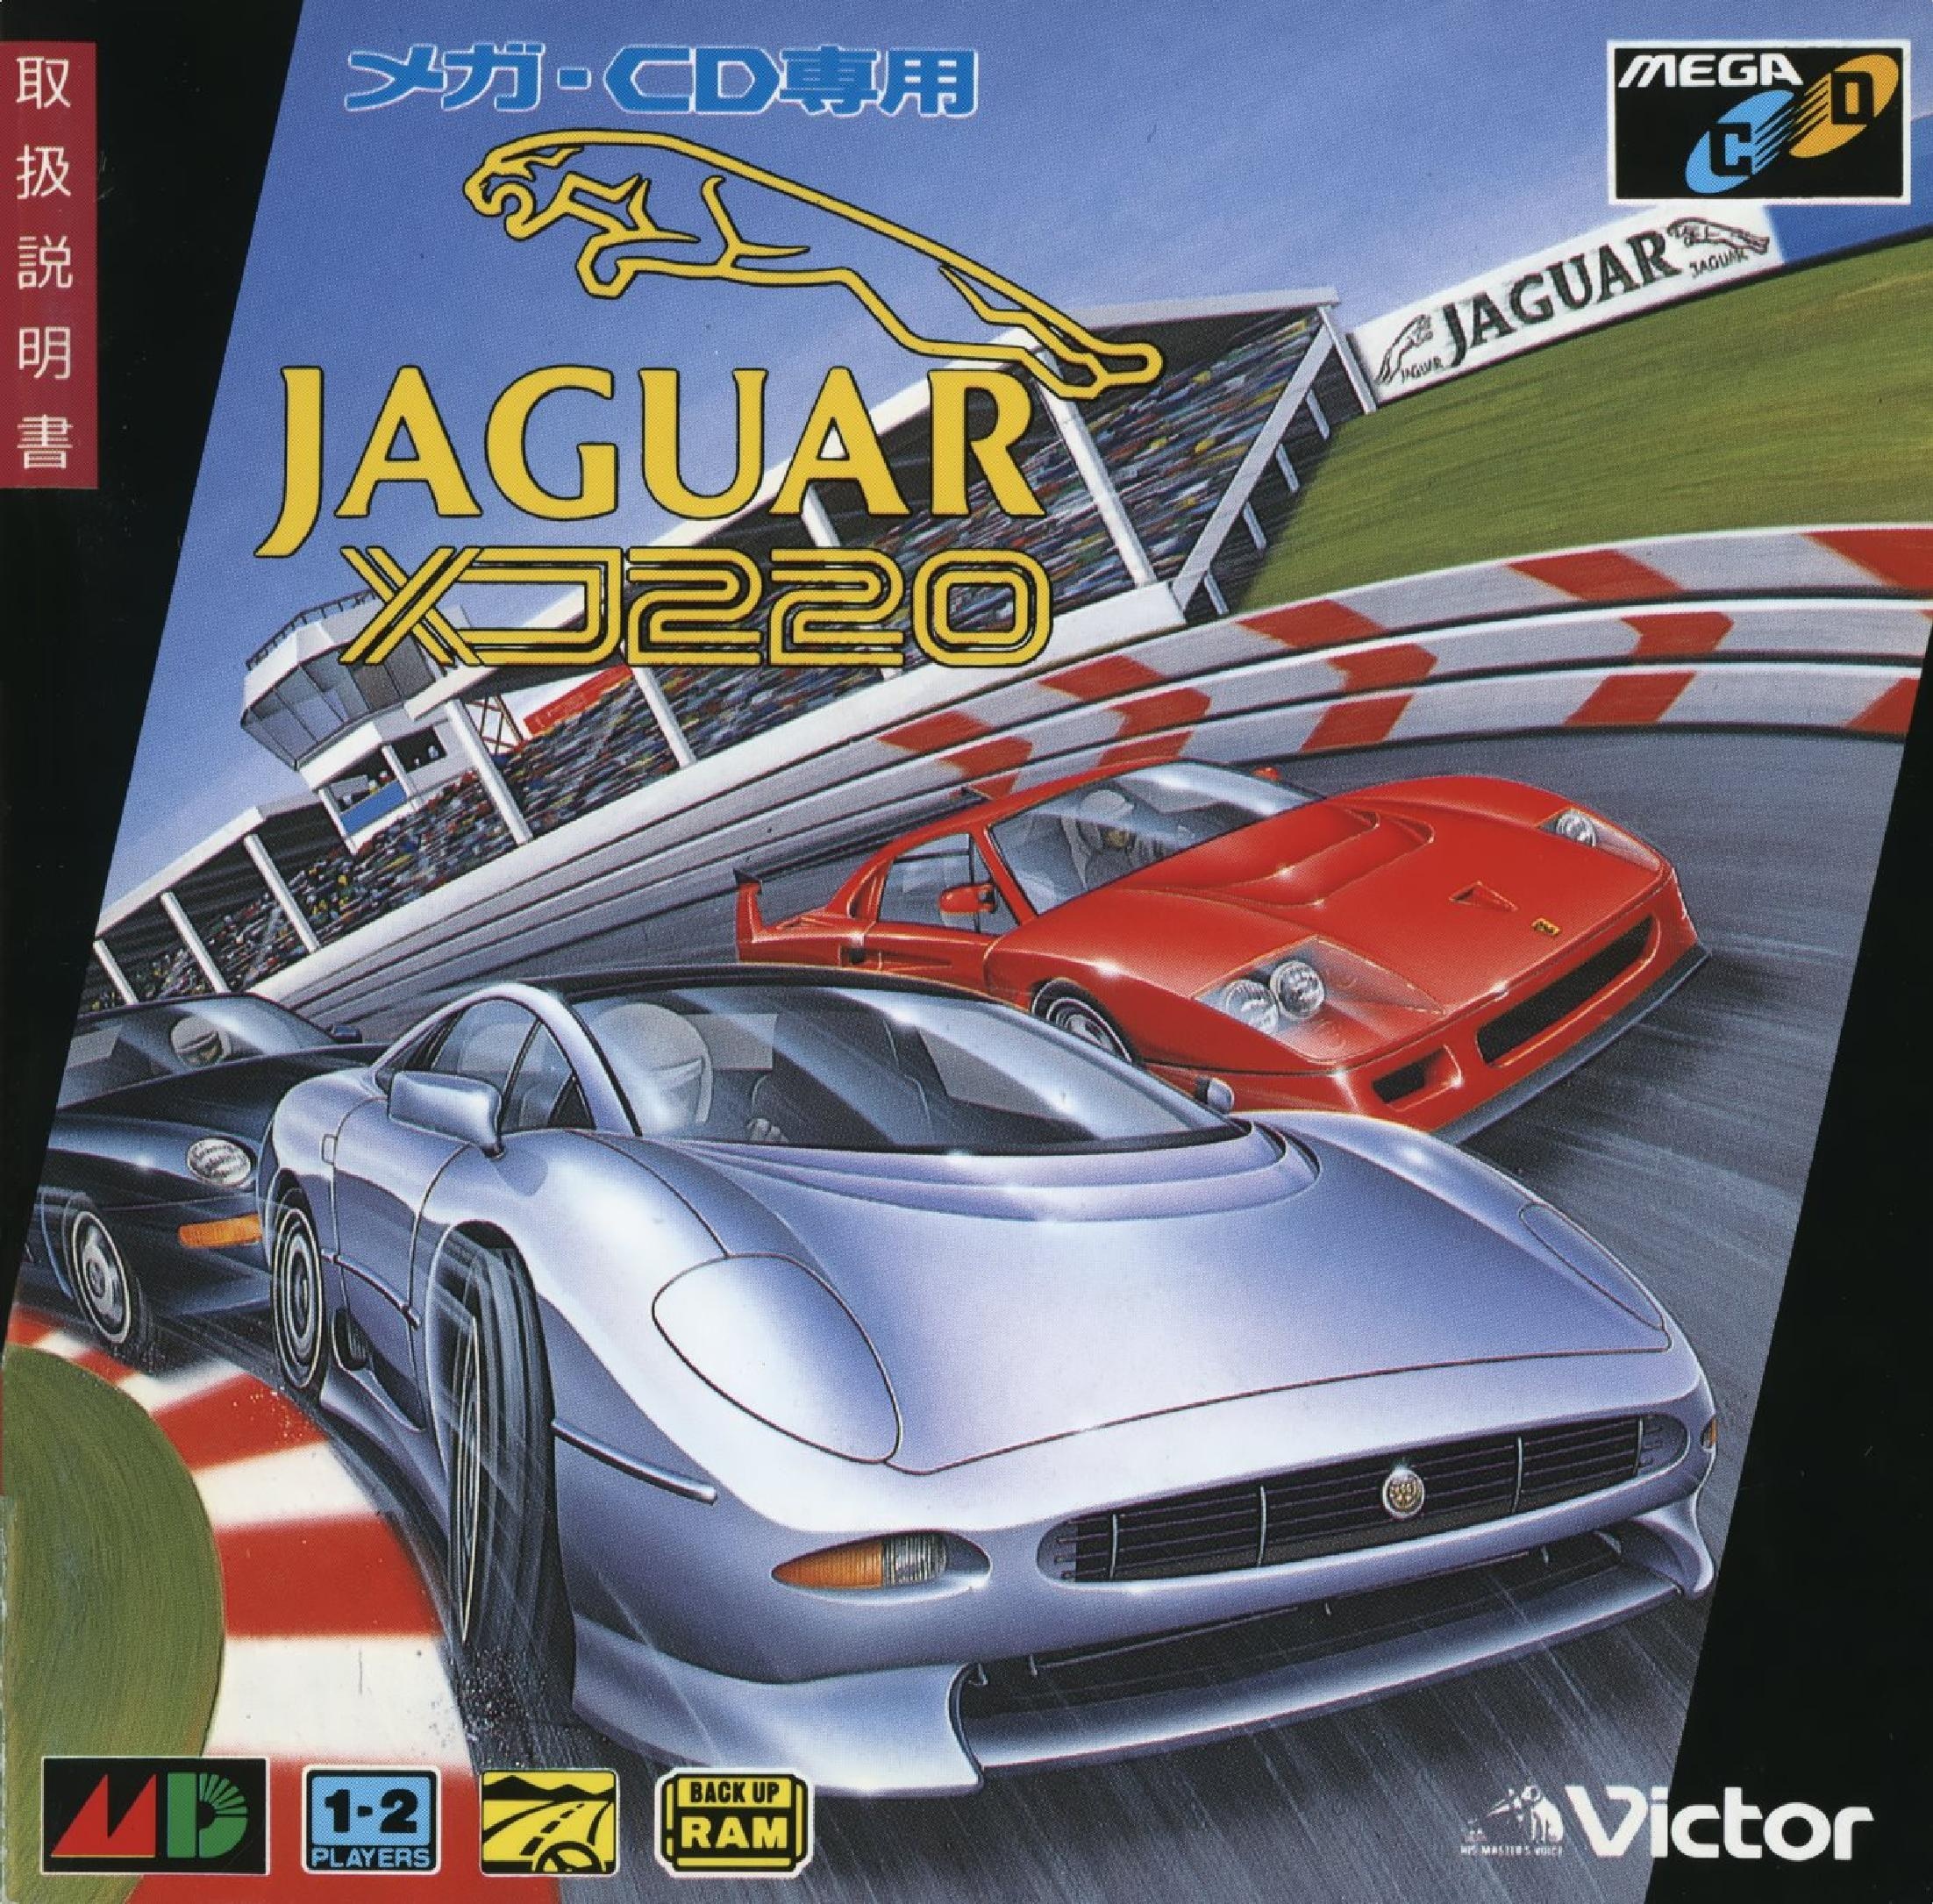 JaguarXJ220 MD jp manual.pdf